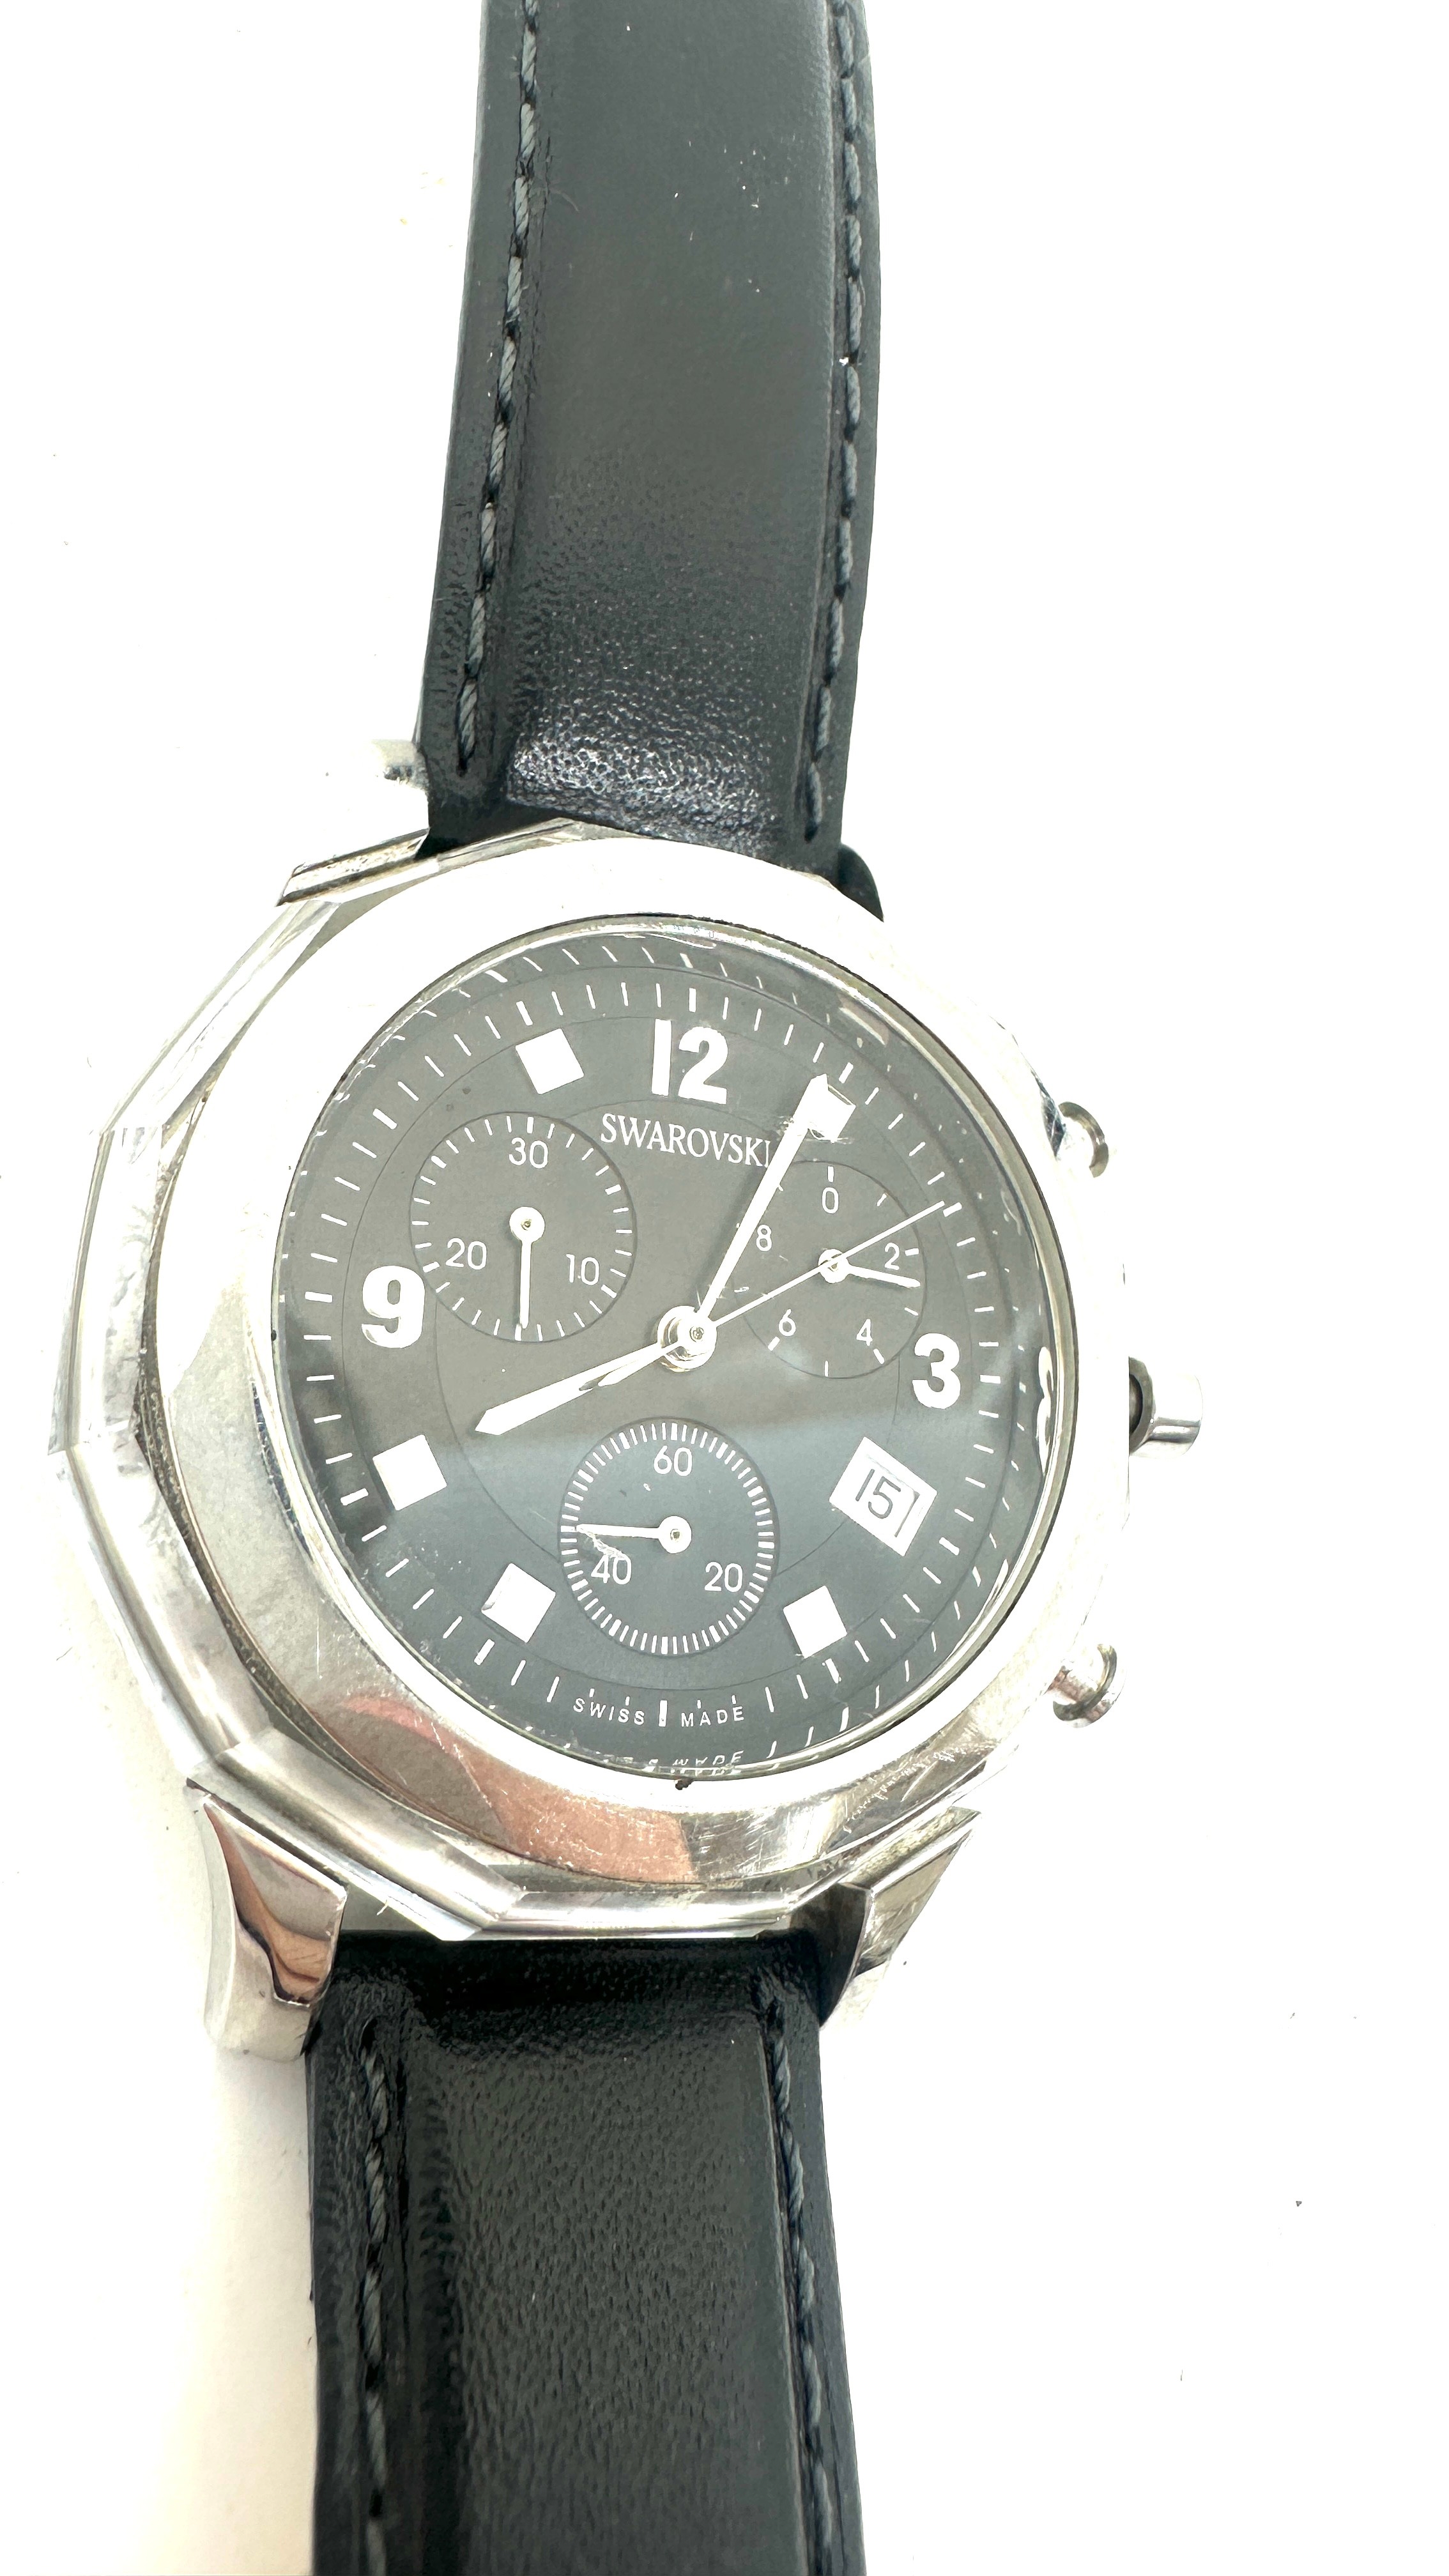 Swarovski chronograph wrist watch, ticking but no warranty given - Image 3 of 4